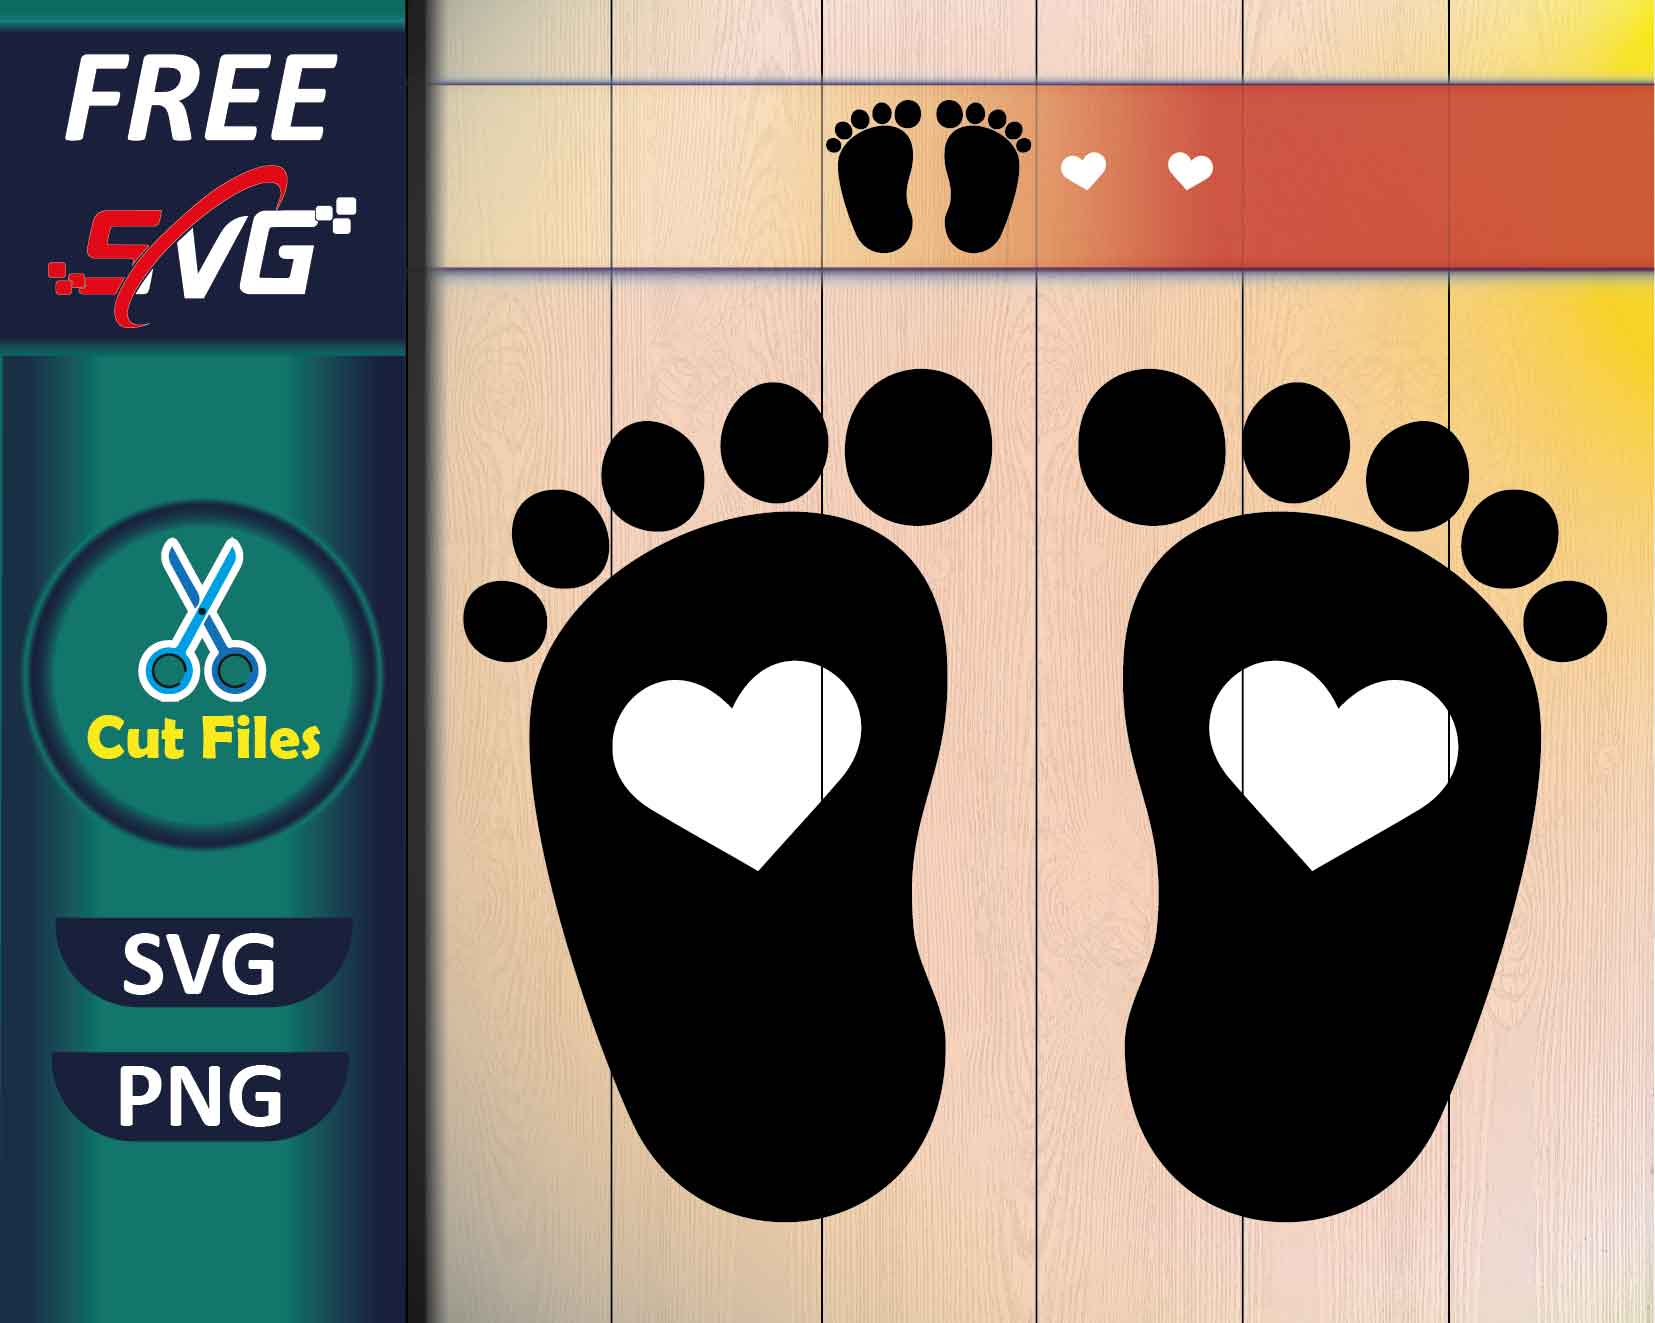 Baby feet SVG Free Download, baby footprint SVG free - Free SVG Cut Files